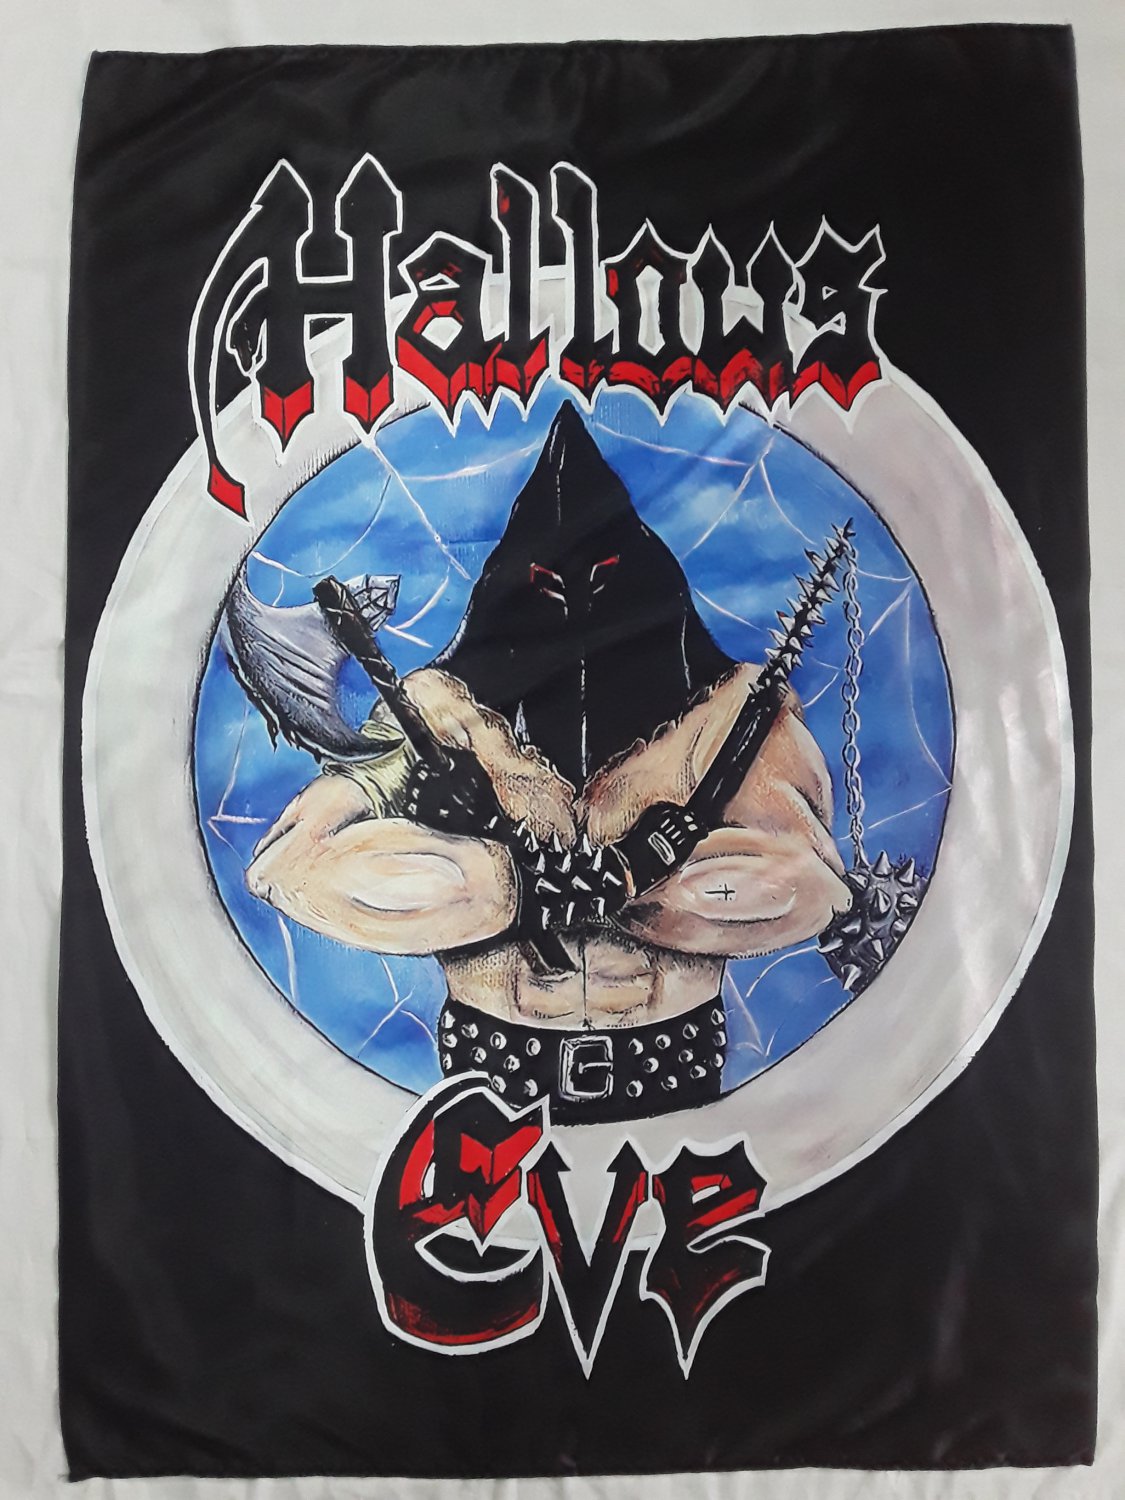 HALLOWS EVE - Tales of terror FLAG Poster Banner Thrash METAL Nasty savage